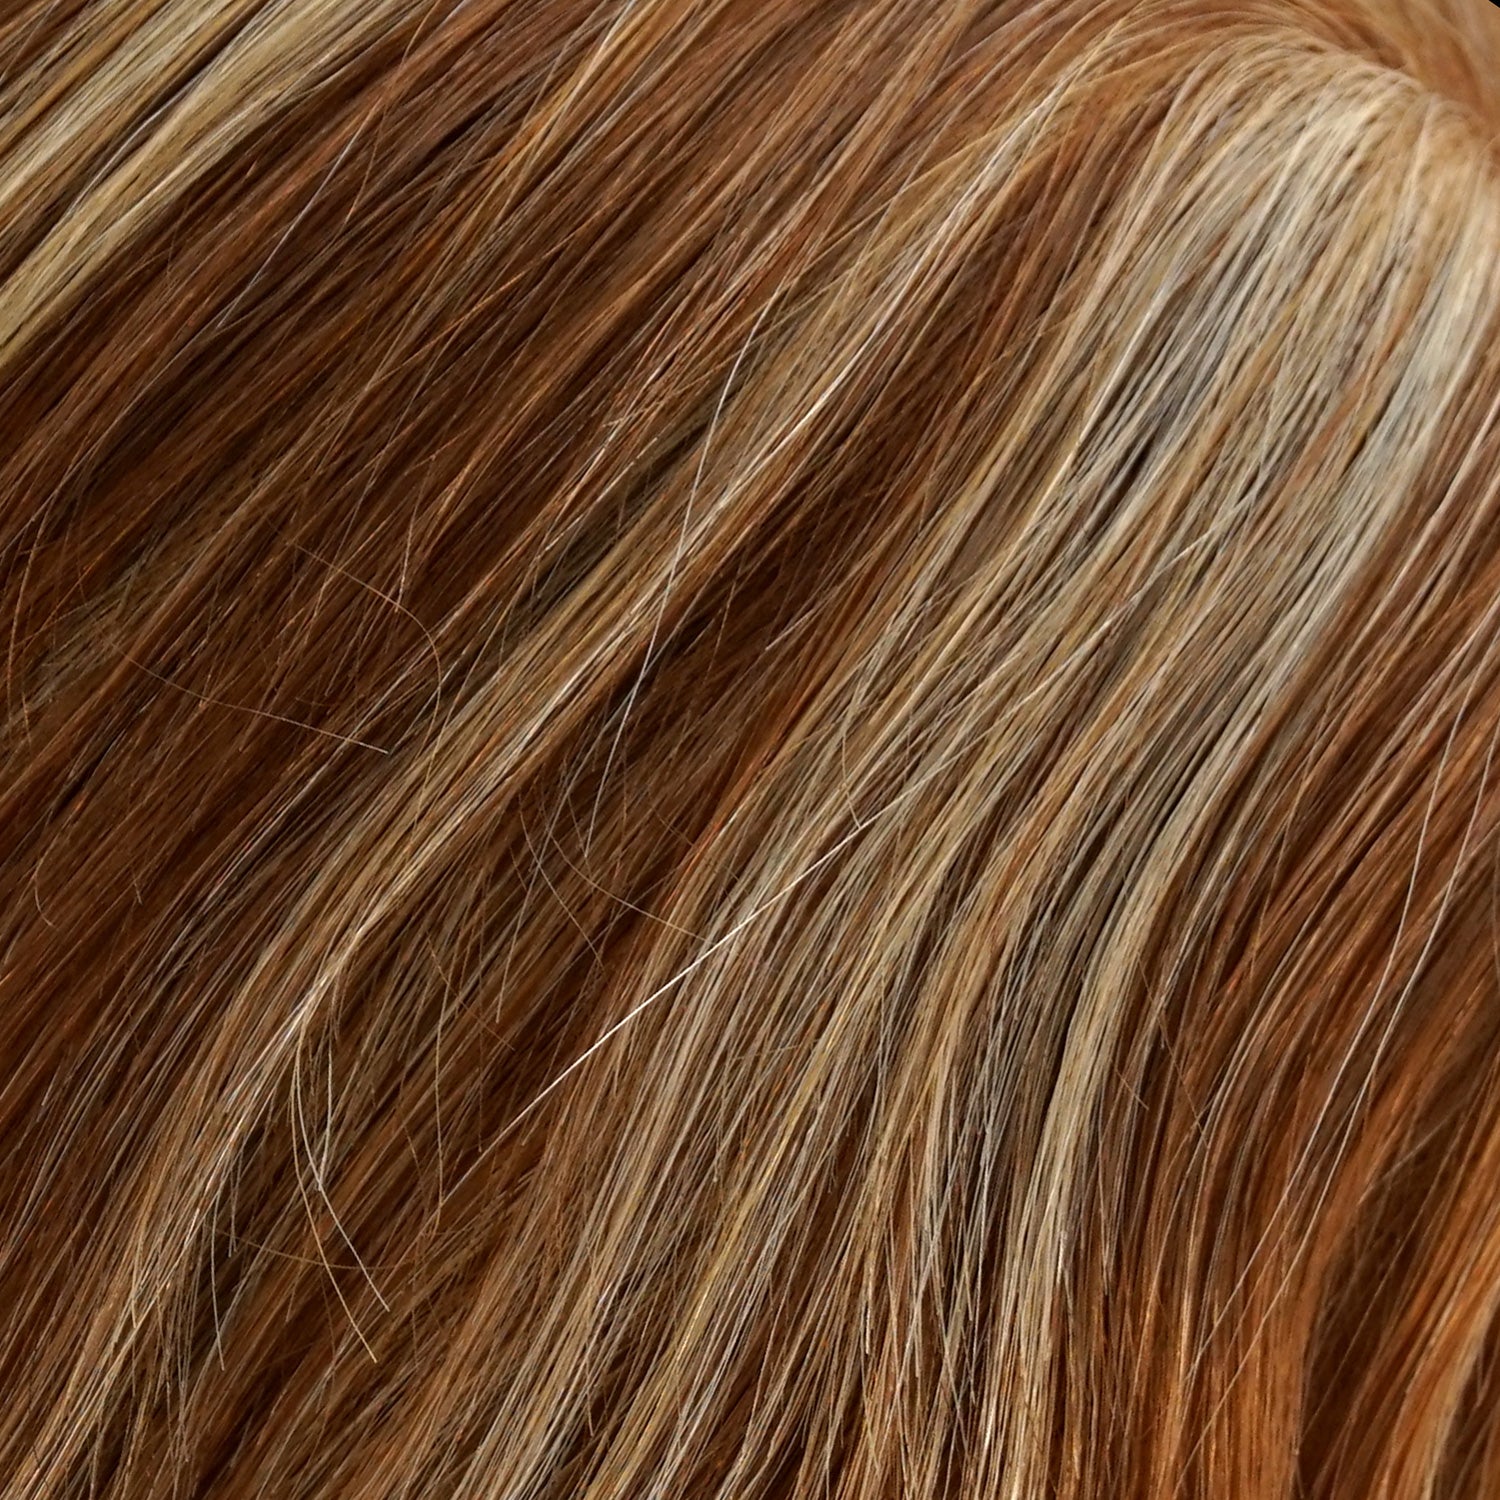 Perruque Cheveux Humains Naturels Avec Mèches Jon Renau Blake Couleur Sirop fs26-31